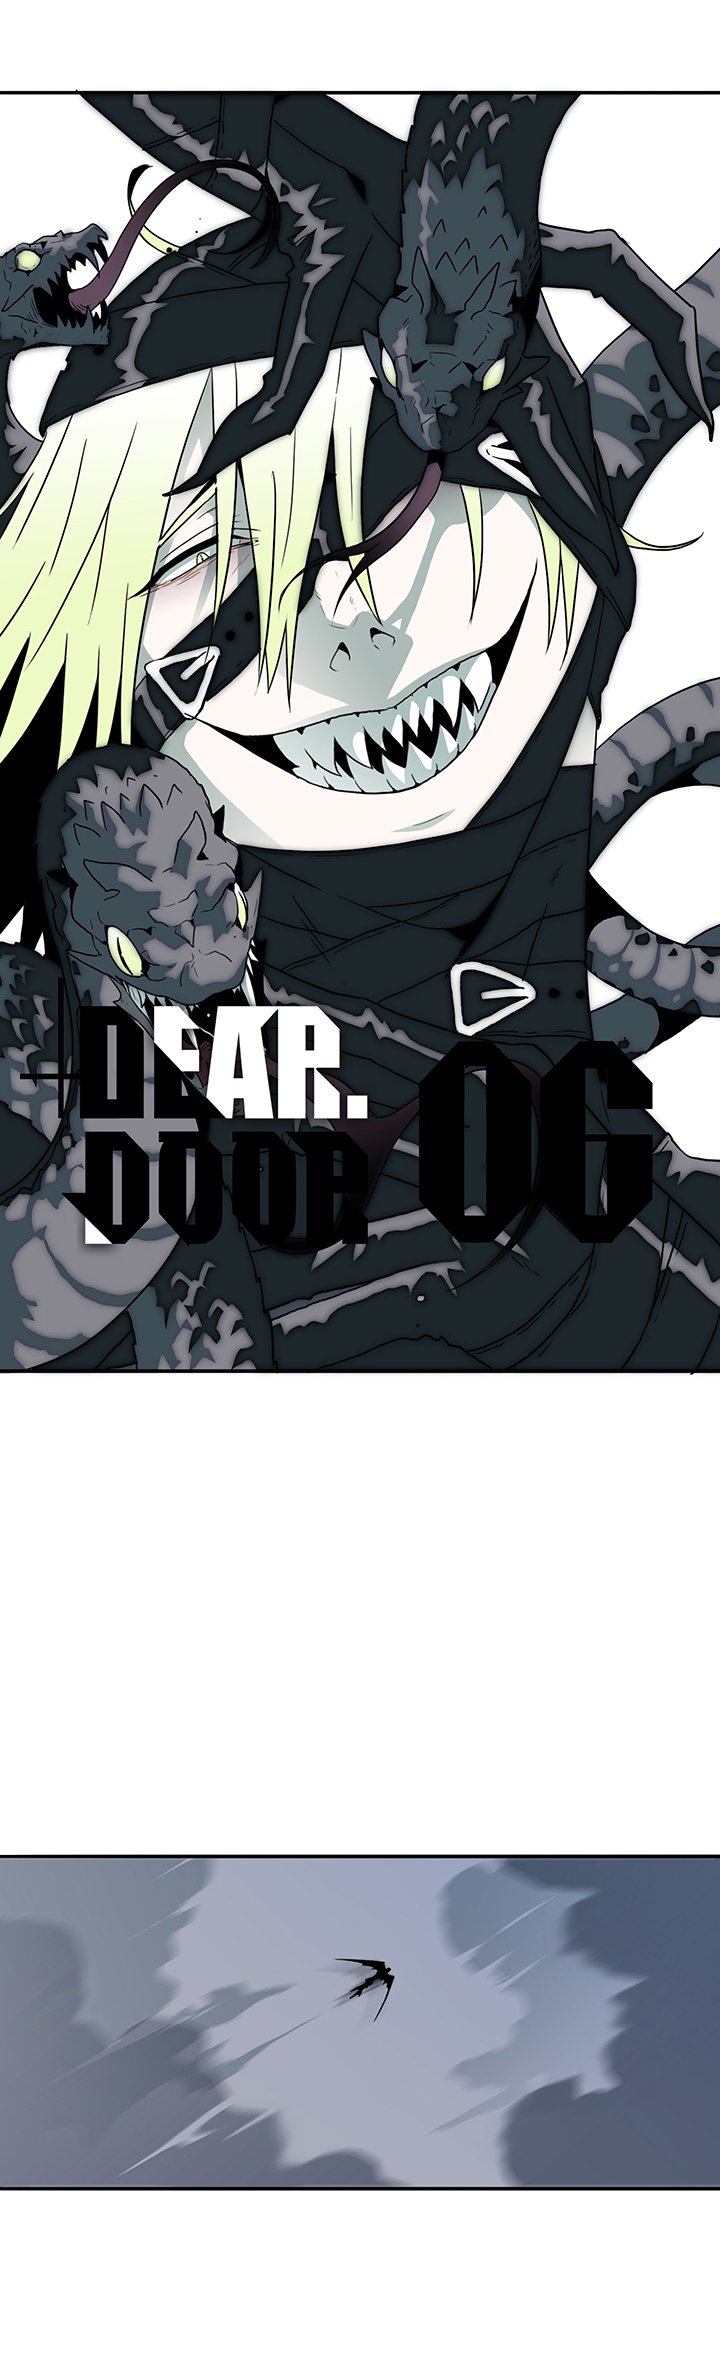 Dear Door 6 1